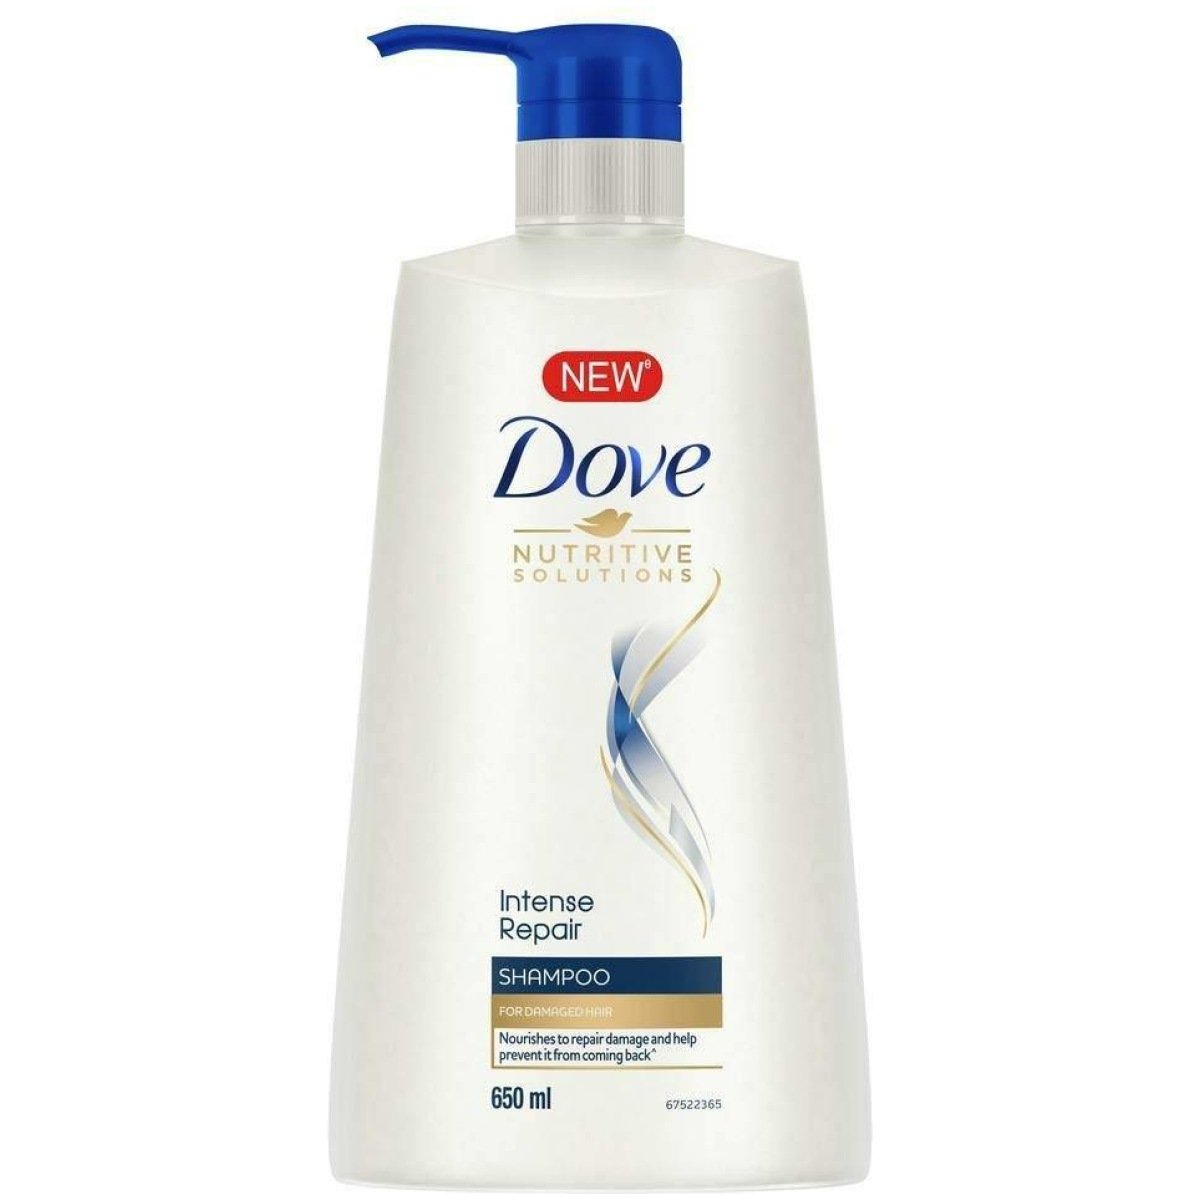 Dove Nutritive Solutions Intensive Repair Shampoo 650ml